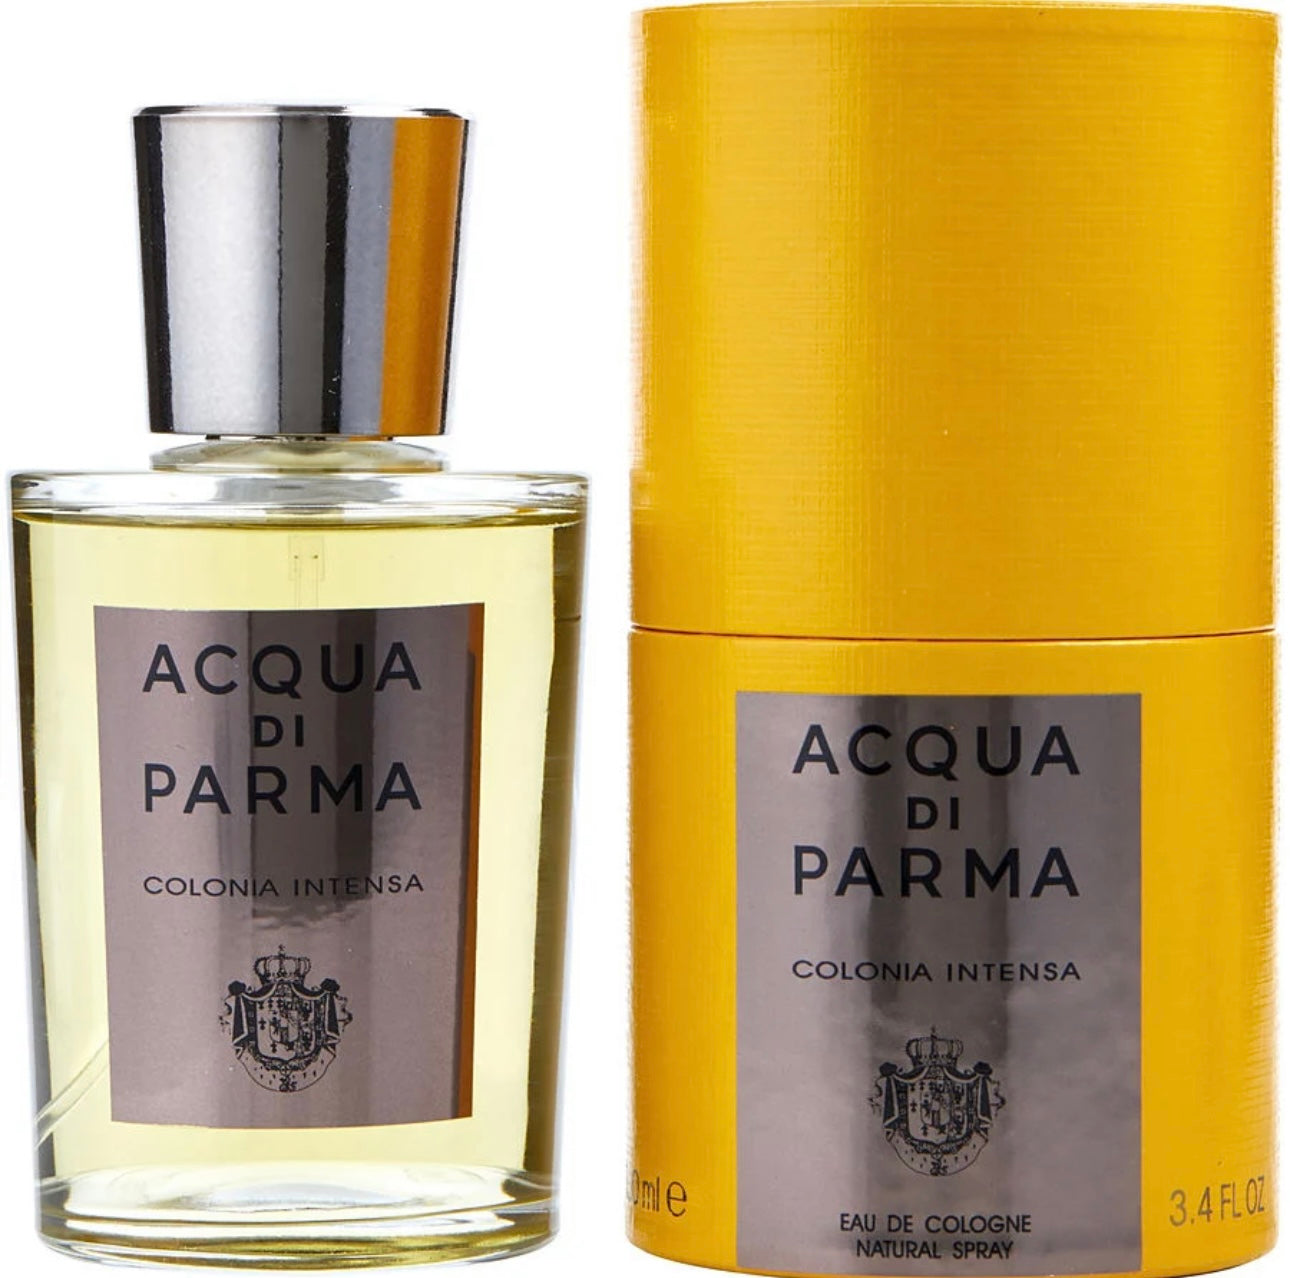 Acqua Di Parma- – Colonia Intensa LLC World Vanity EdC